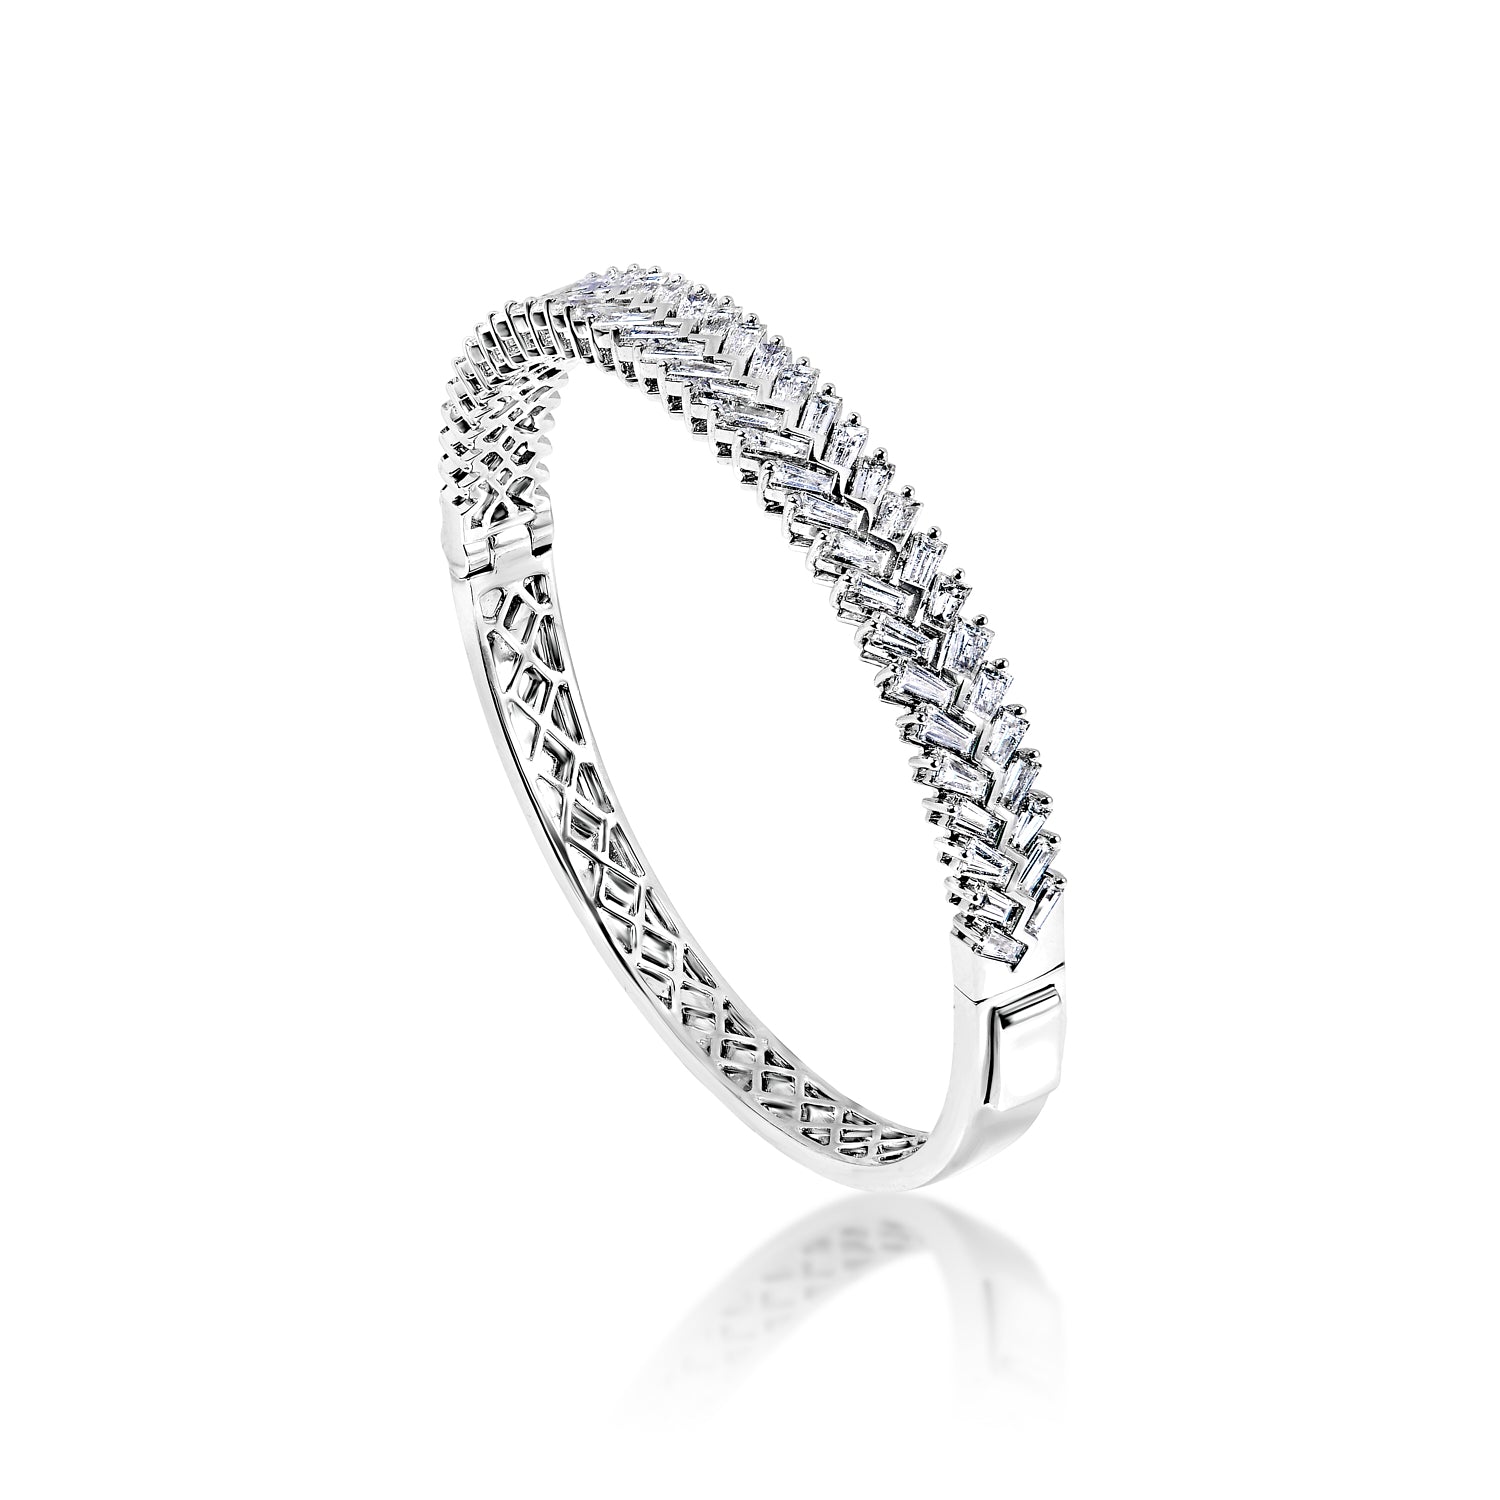  SKYE 6 Carat Emerald Cut Diamond Bangle Bracelet in 14k White Gold Side View